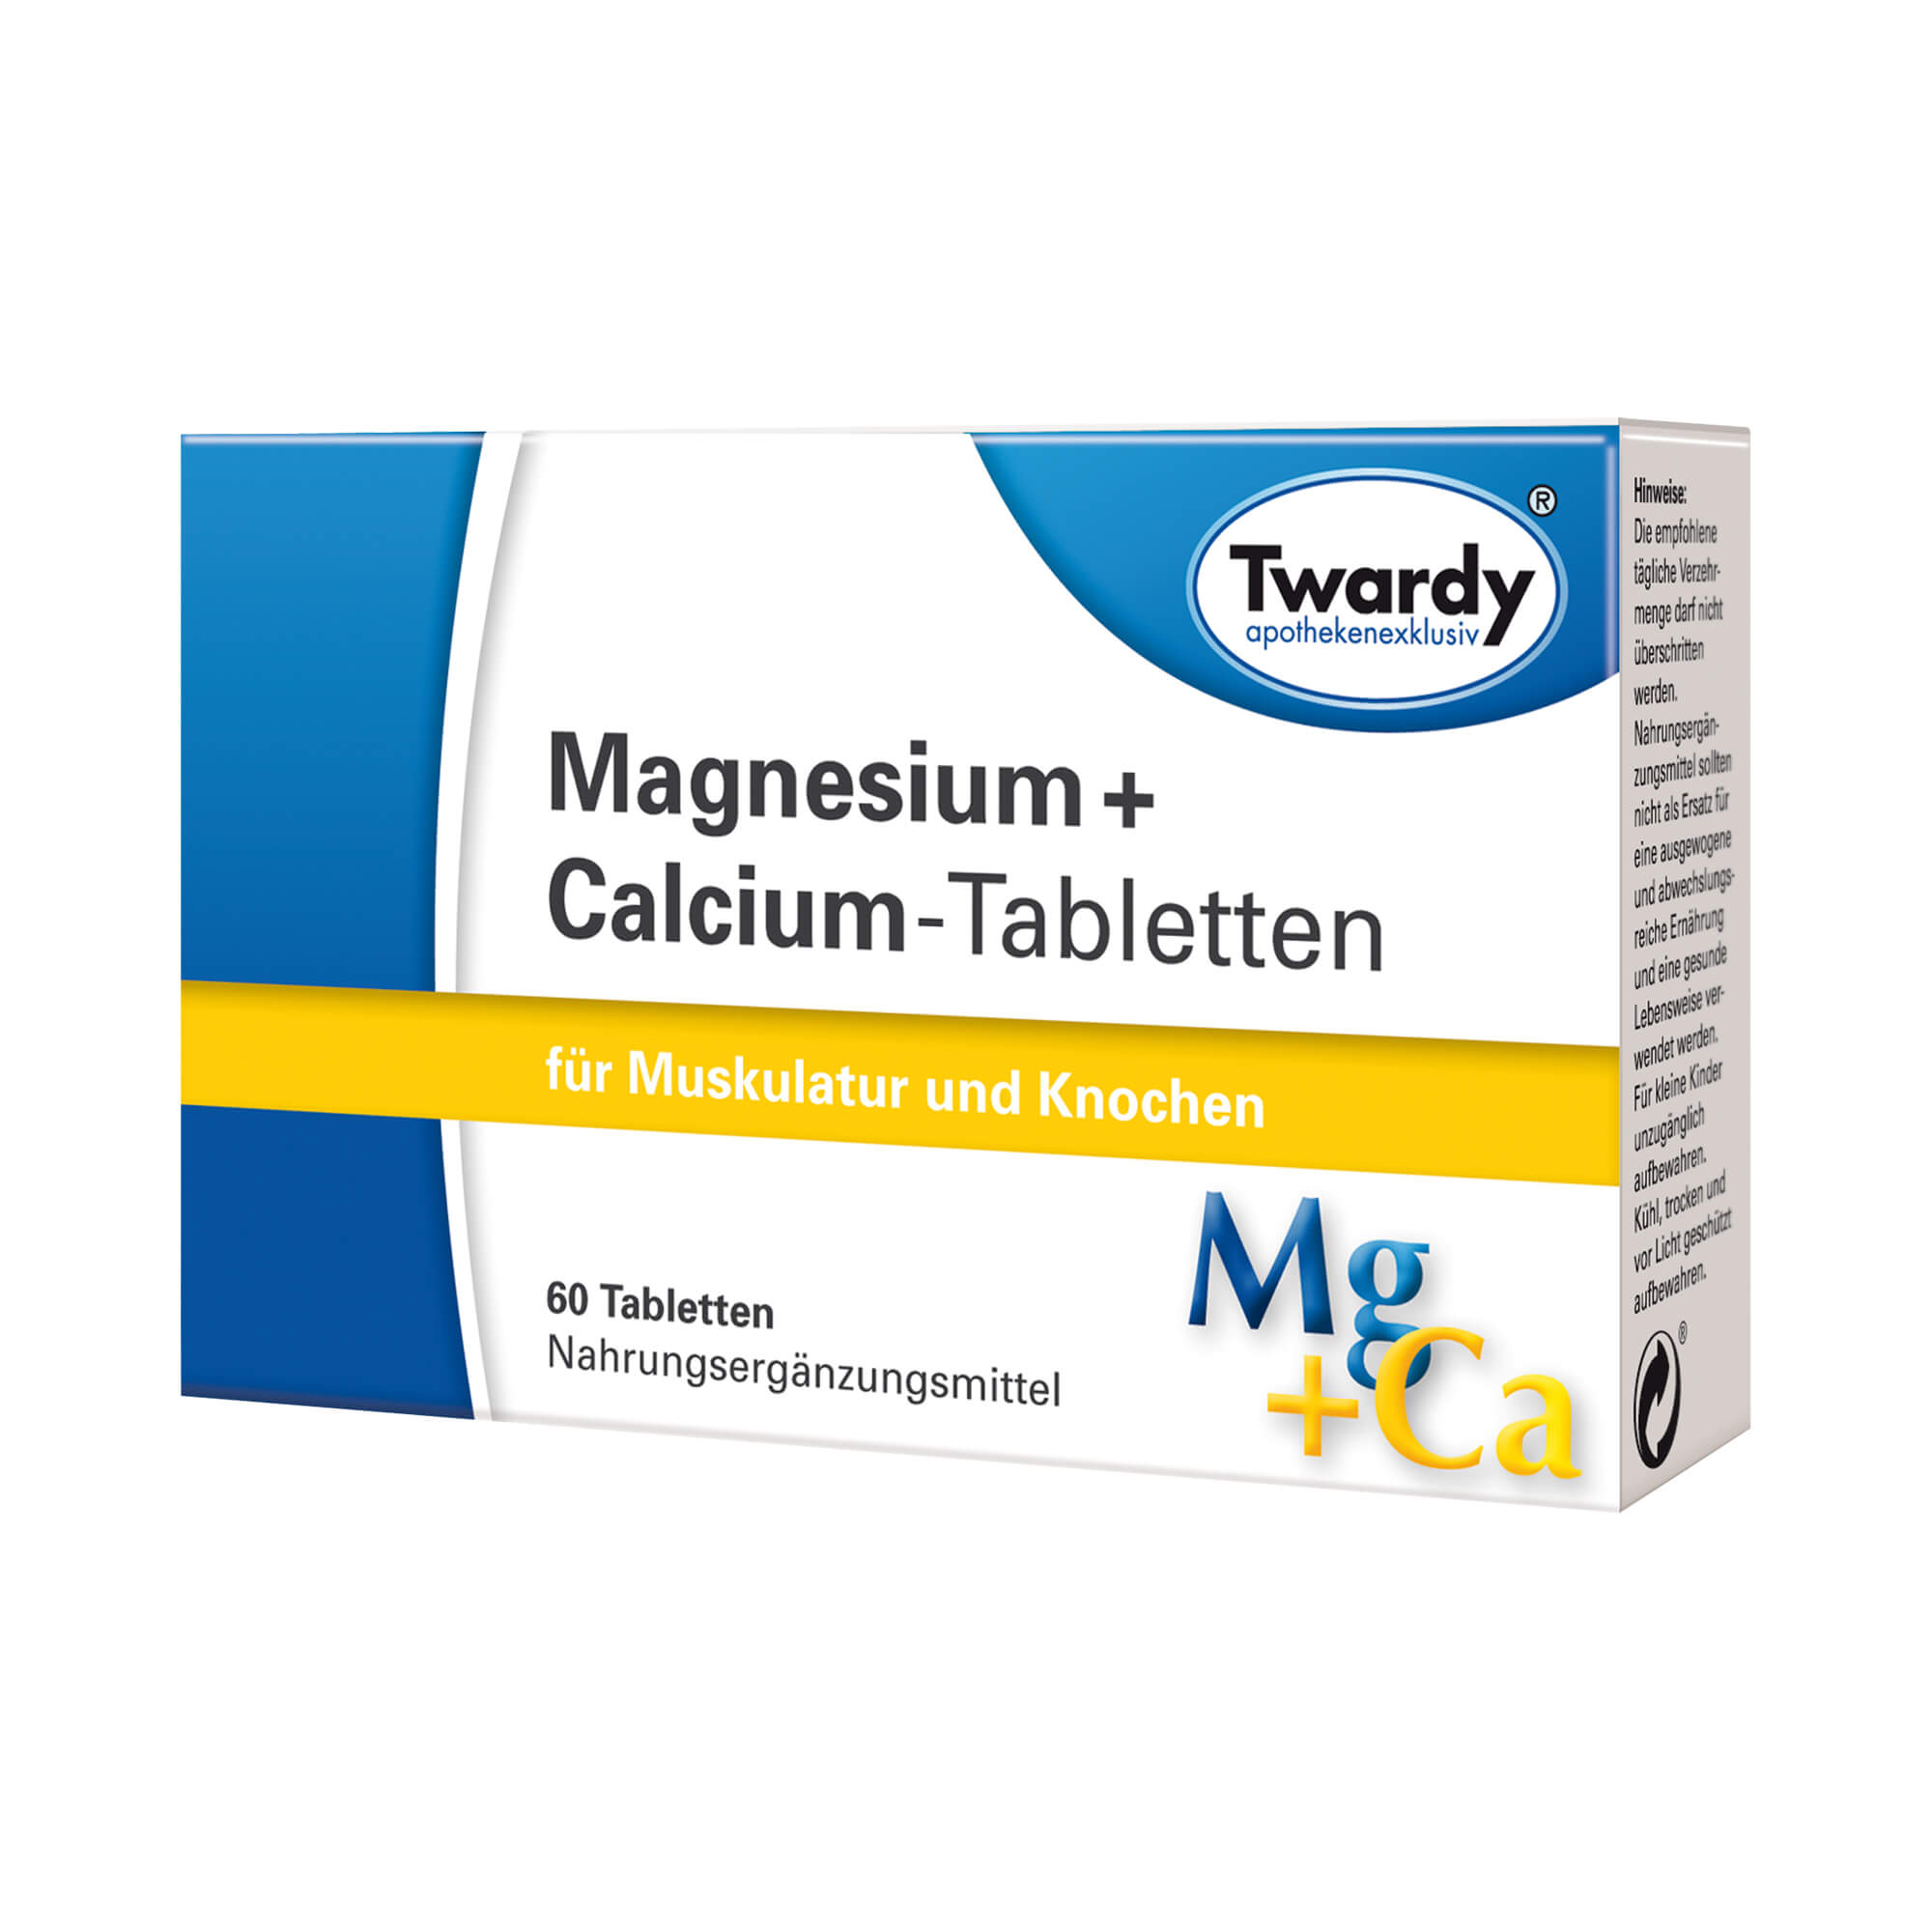 Nahrungsergänzungsmittel mit Magnesium und Calcium.